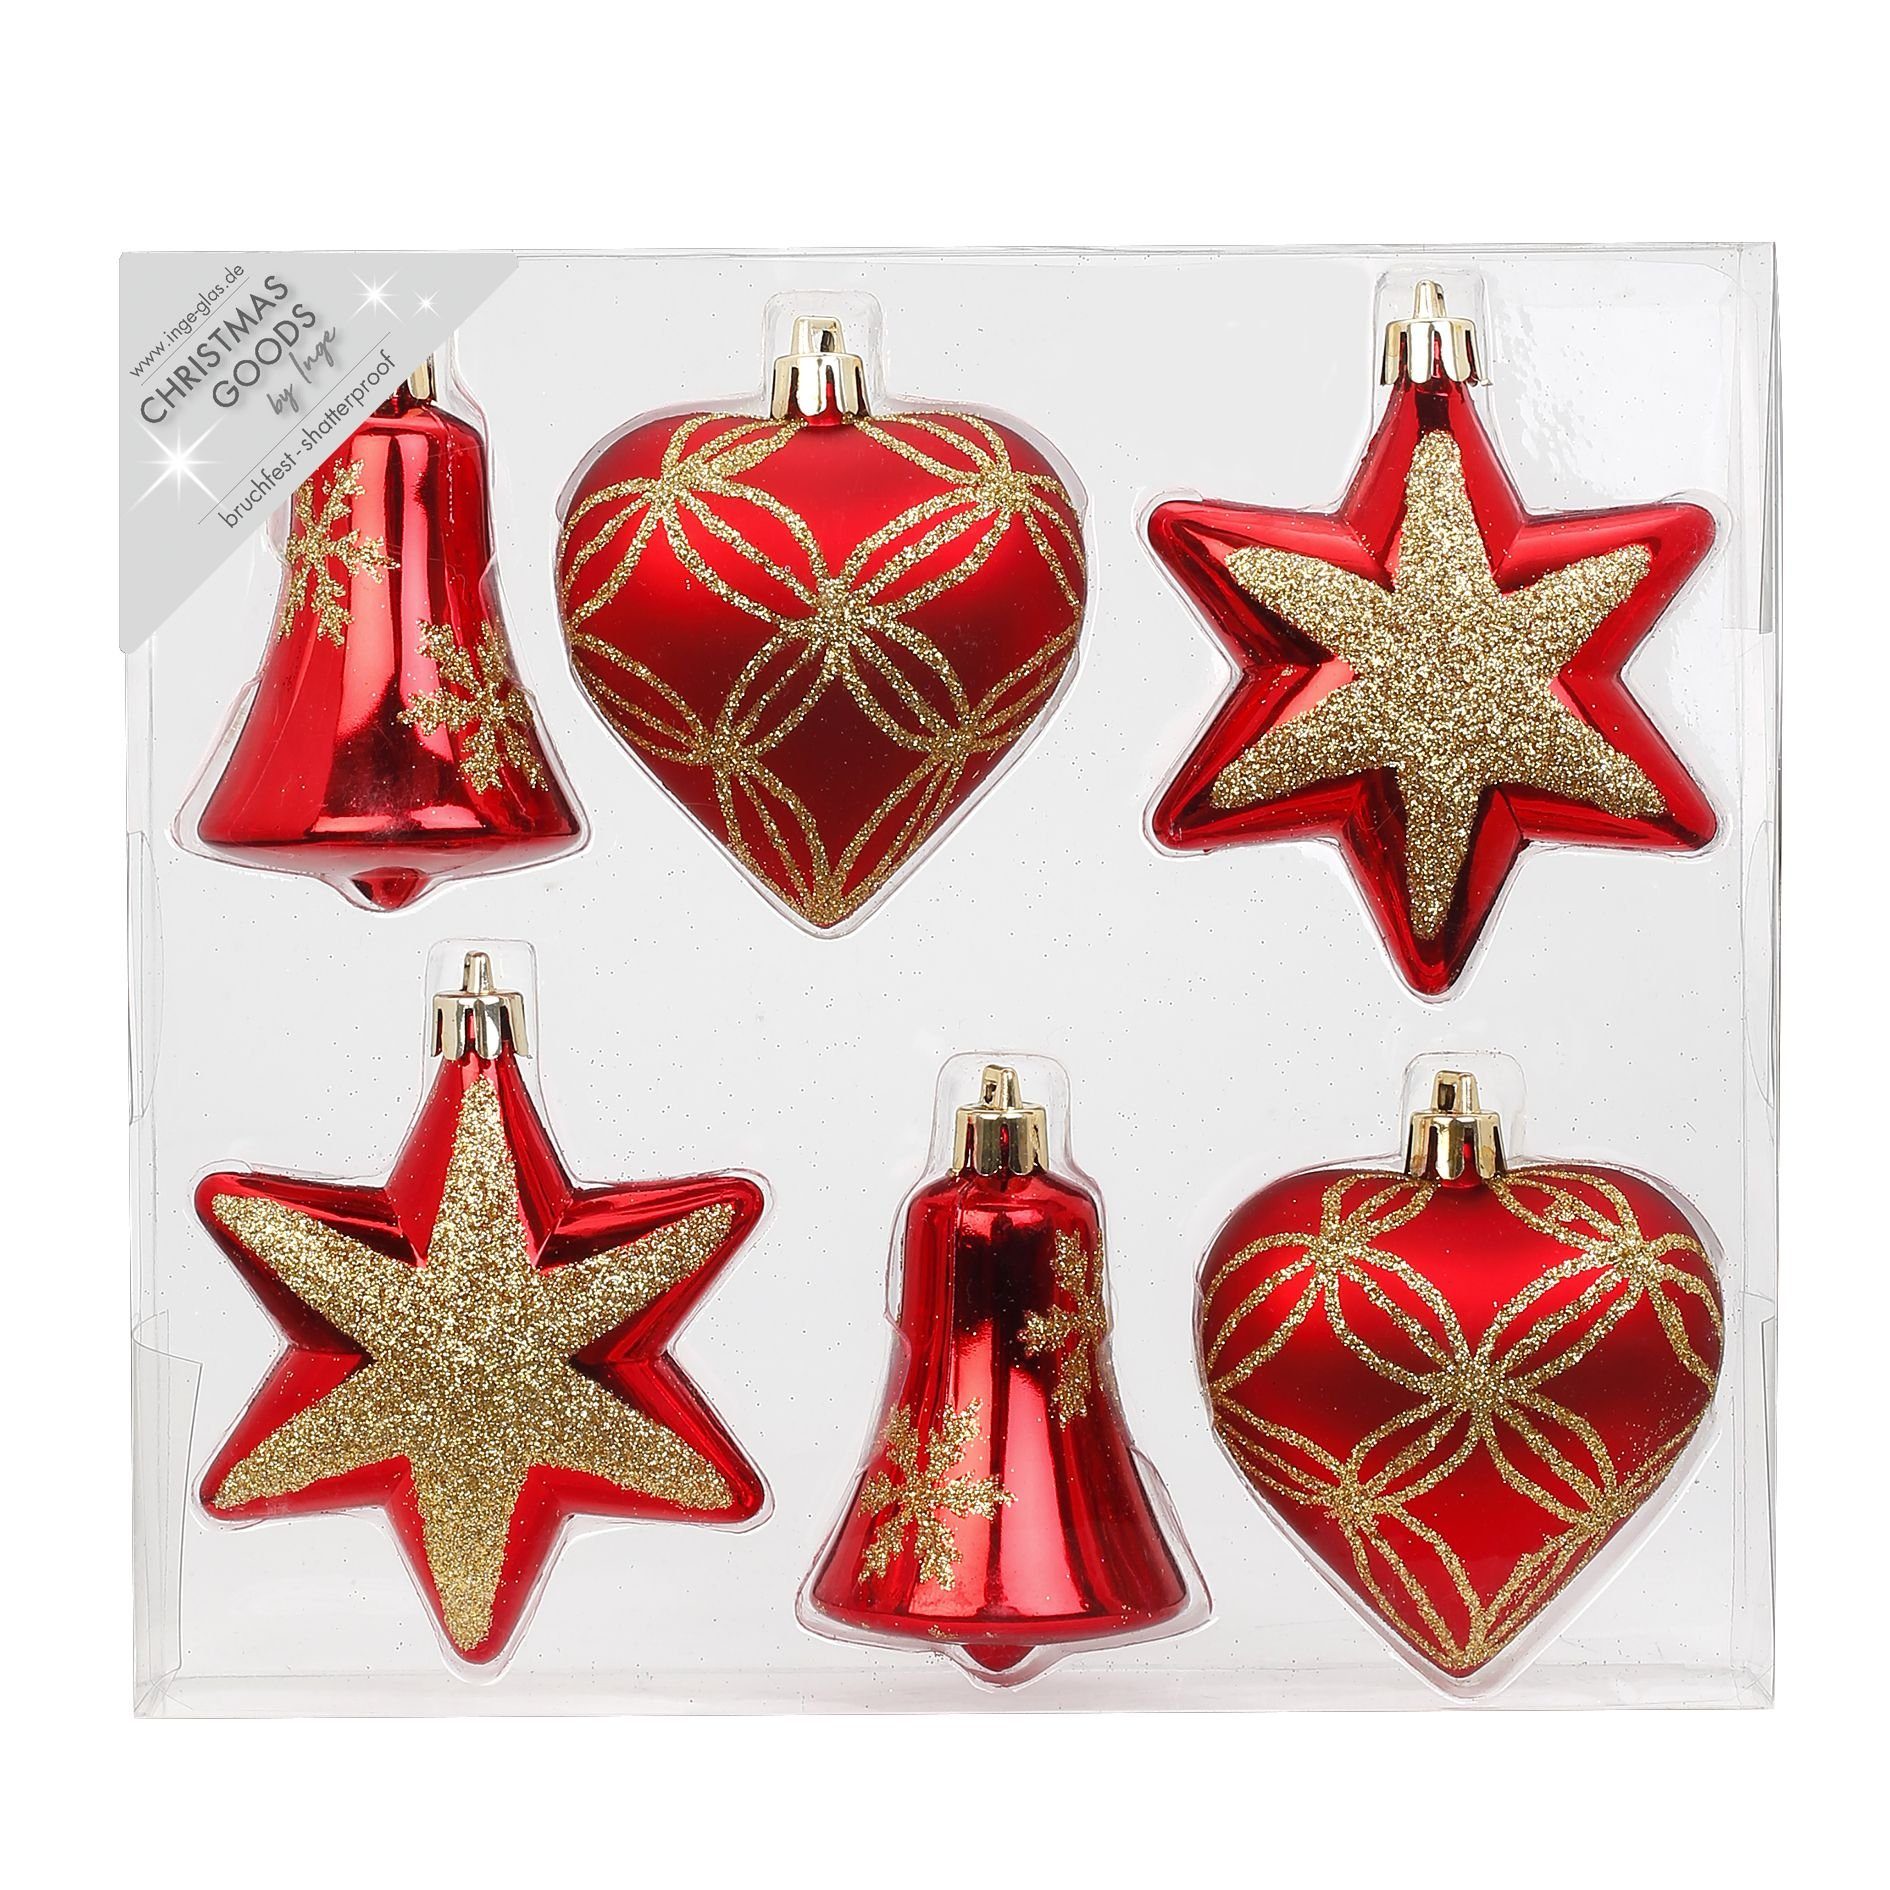 Inge 6er Gold dekoriert by Weihnachtskugeln Kunststoff Formen - Rot 9cm / Set MAGIC Christbaumschmuck,